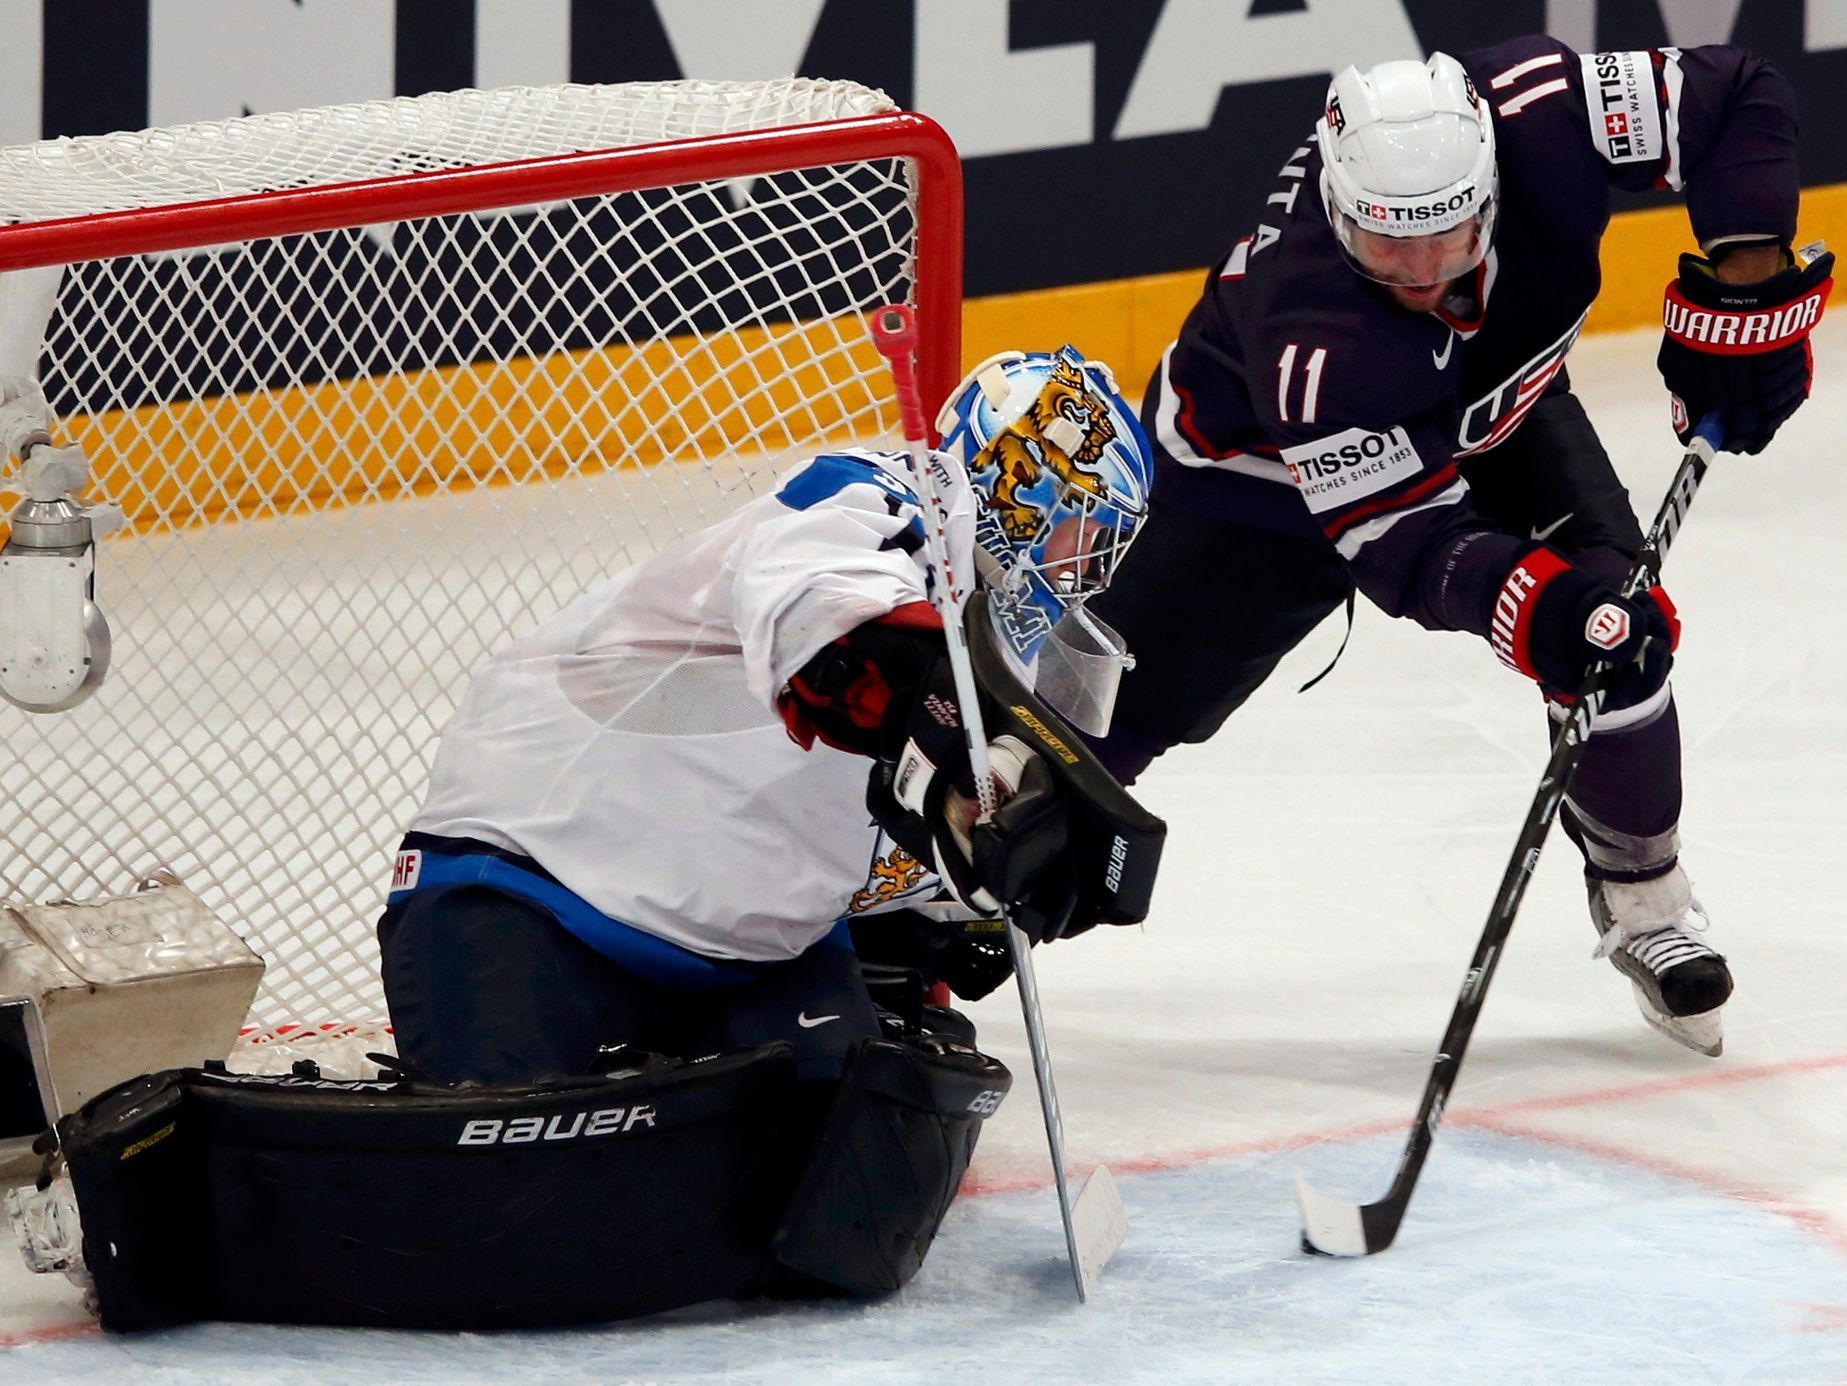 Hokej, MS 2013, USA - Finsko: Stephen Gionta (vpravo) - Antti Raanta